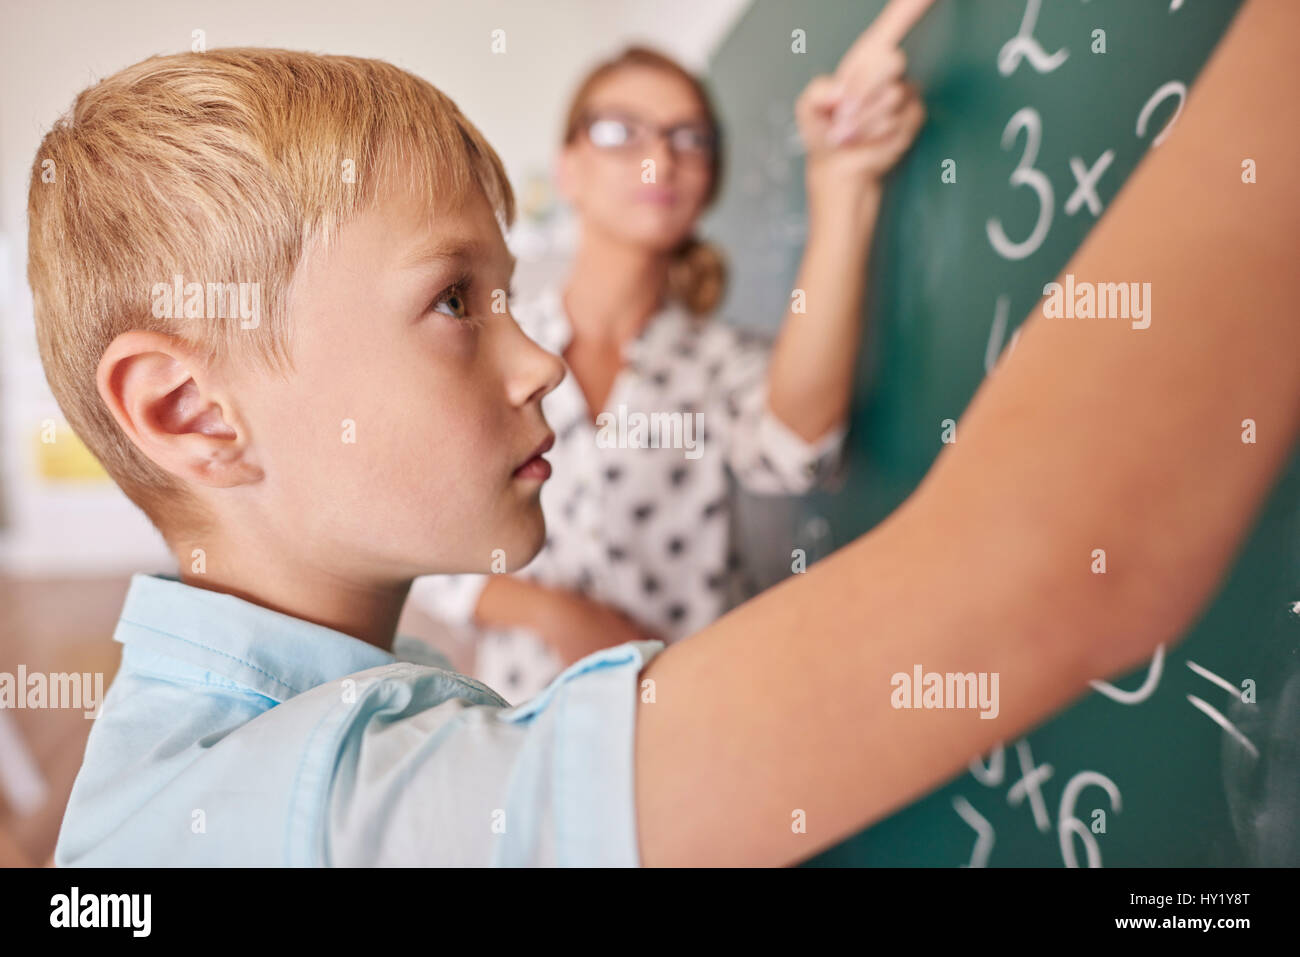 Student boy doing math problem on chalkboard Stock Photo